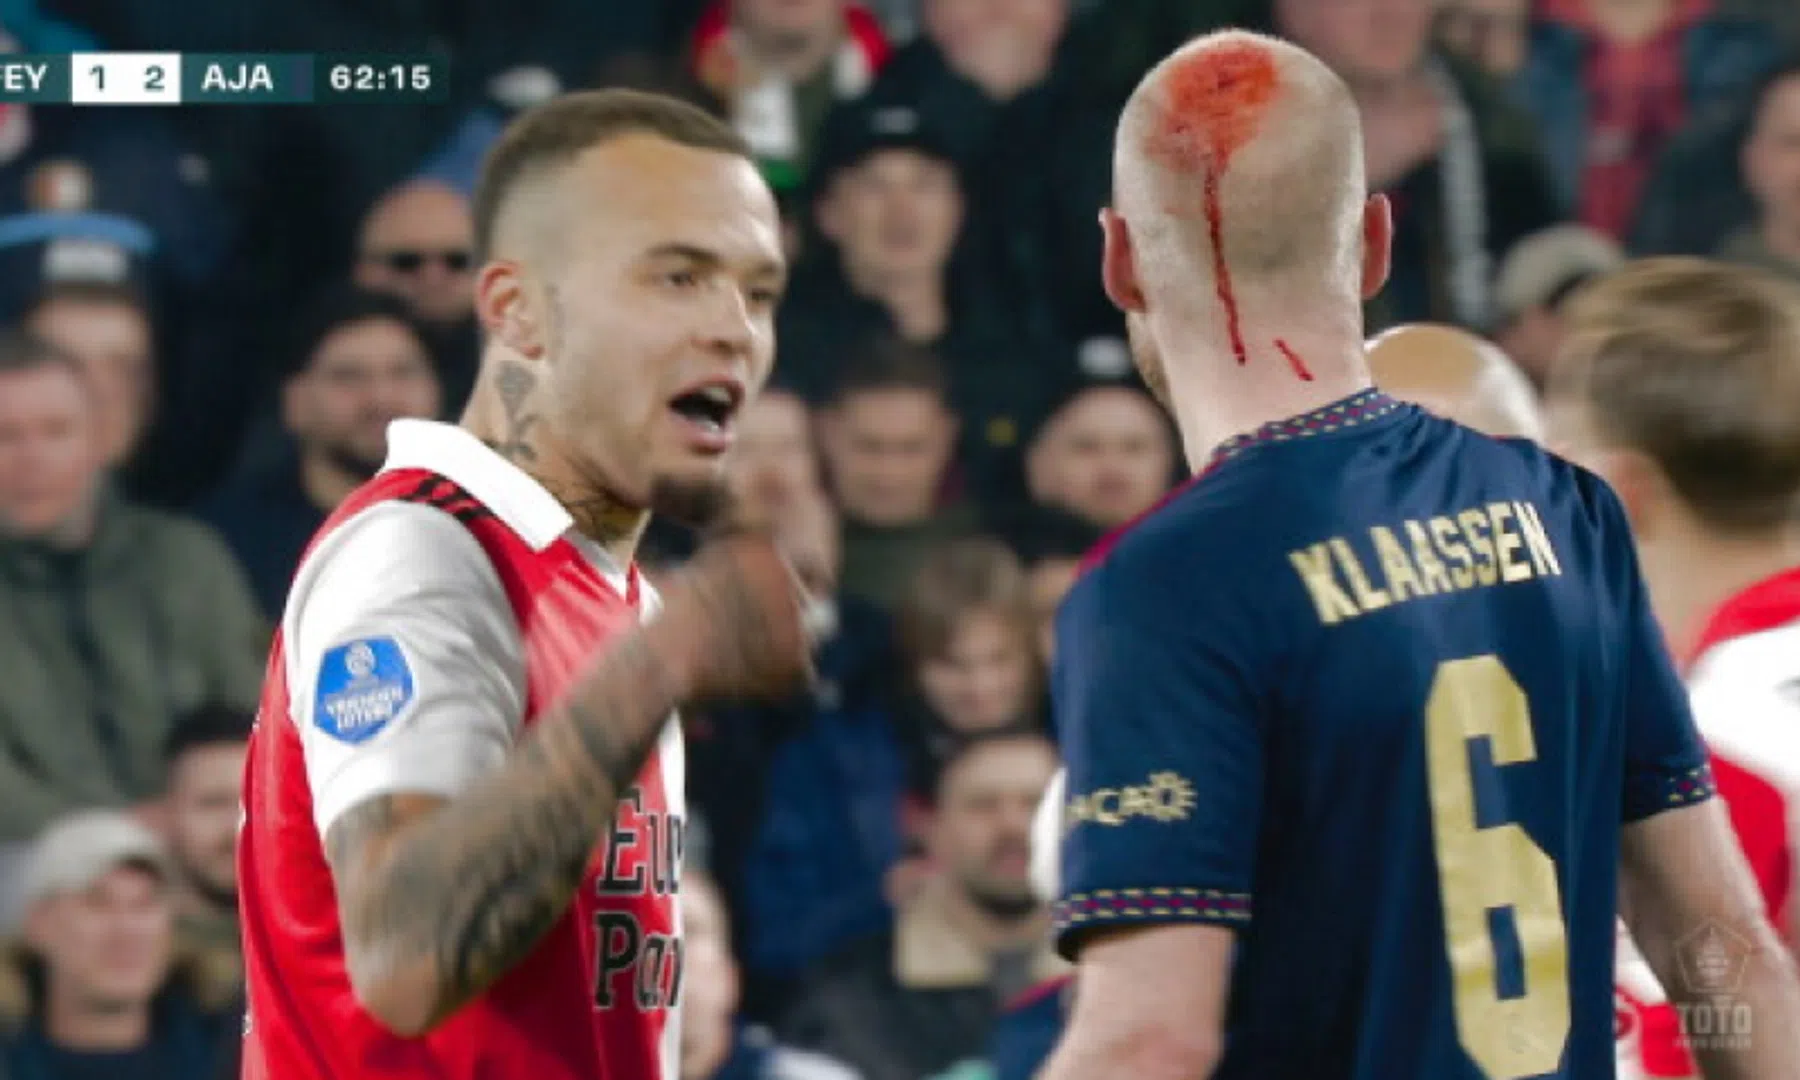 Klassieker gestaakt: Feyenoord-fans gooien voorwerp op Klaassen, die flink bloedt